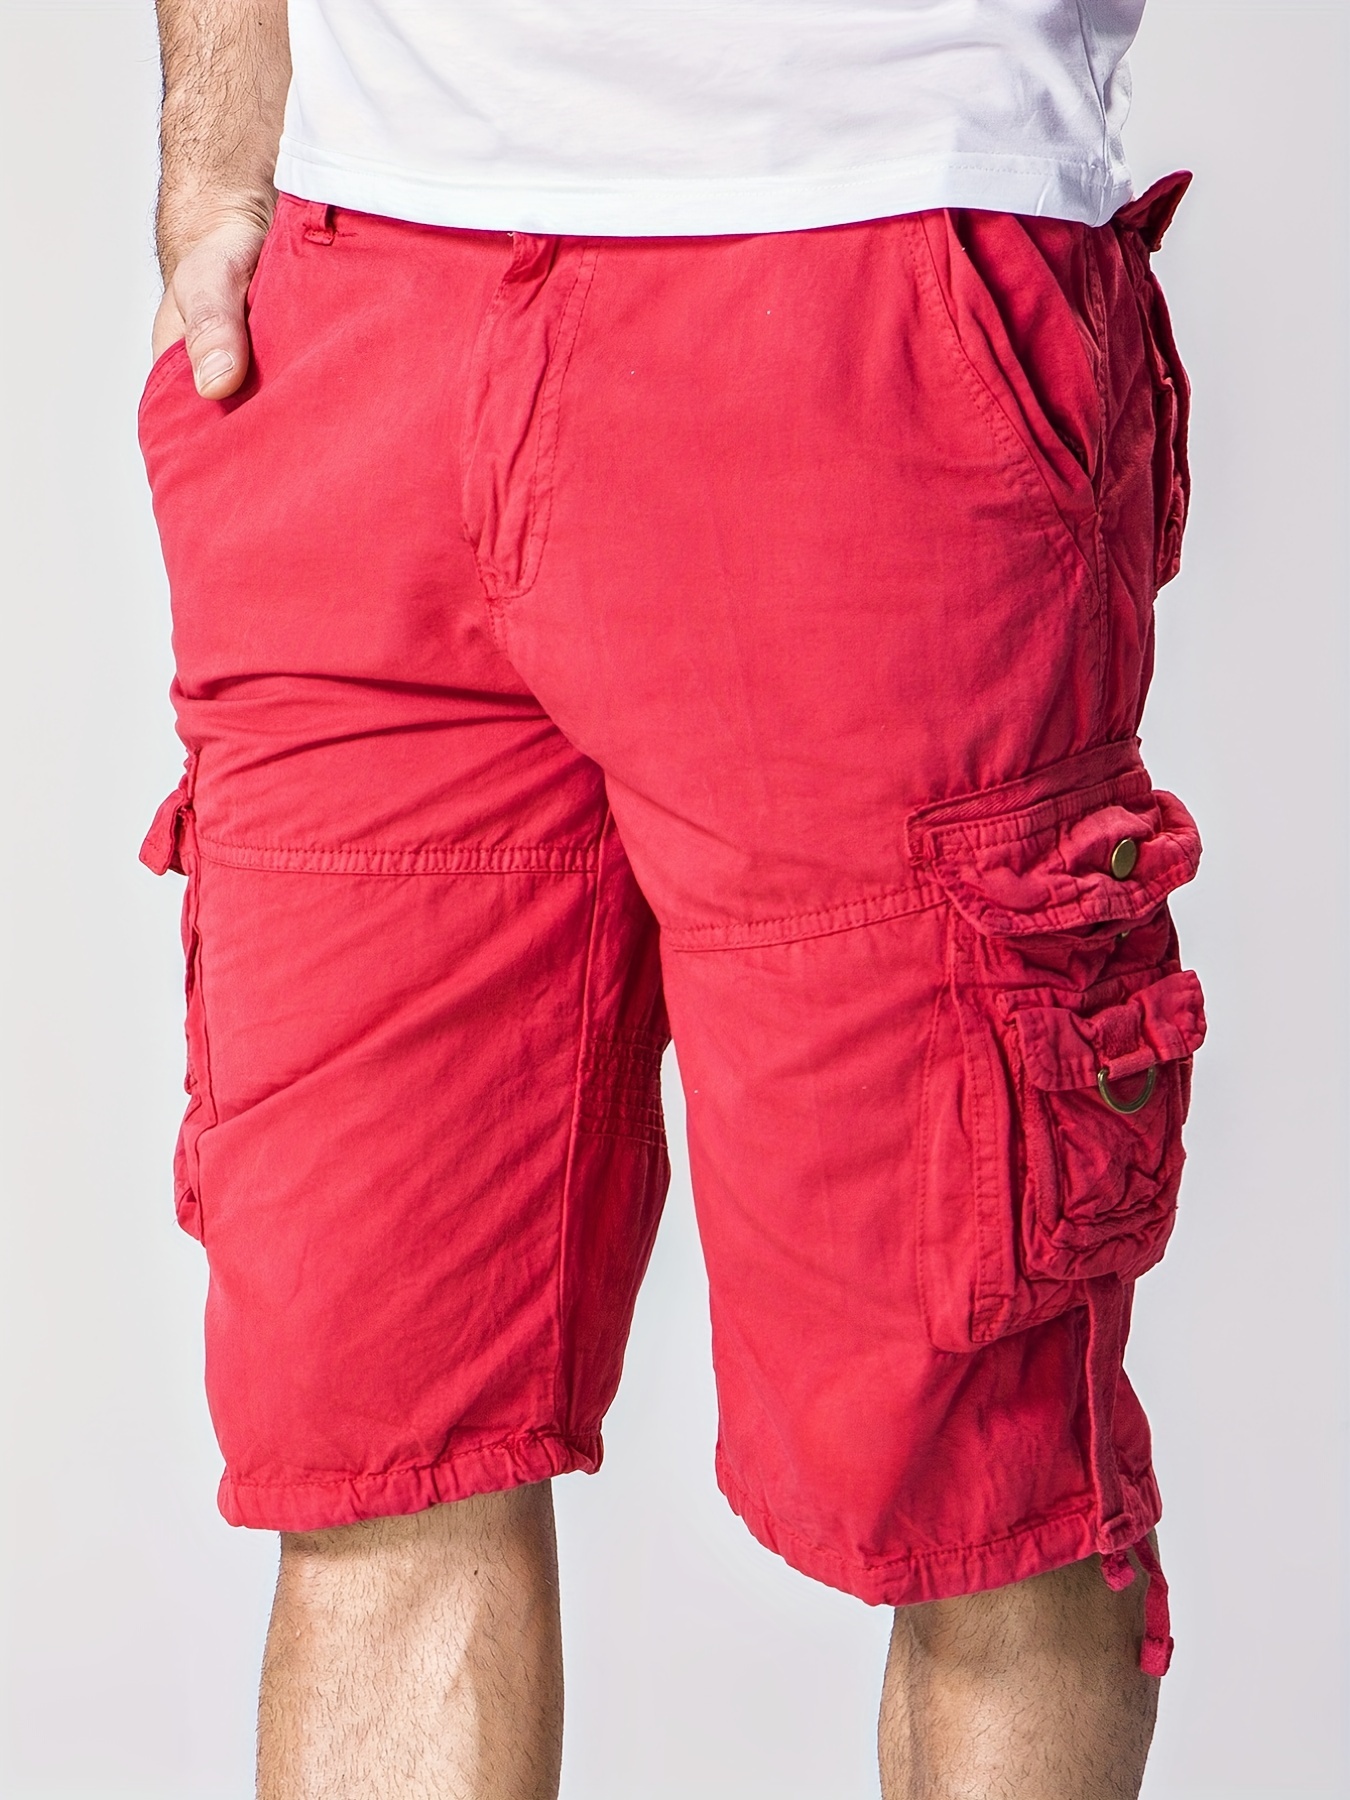 Tejiojio Men's Classic-Fit Cargo Shorts Fashion Man Casual Sport Bandage  Summer Pants Solid Activewear Shorts